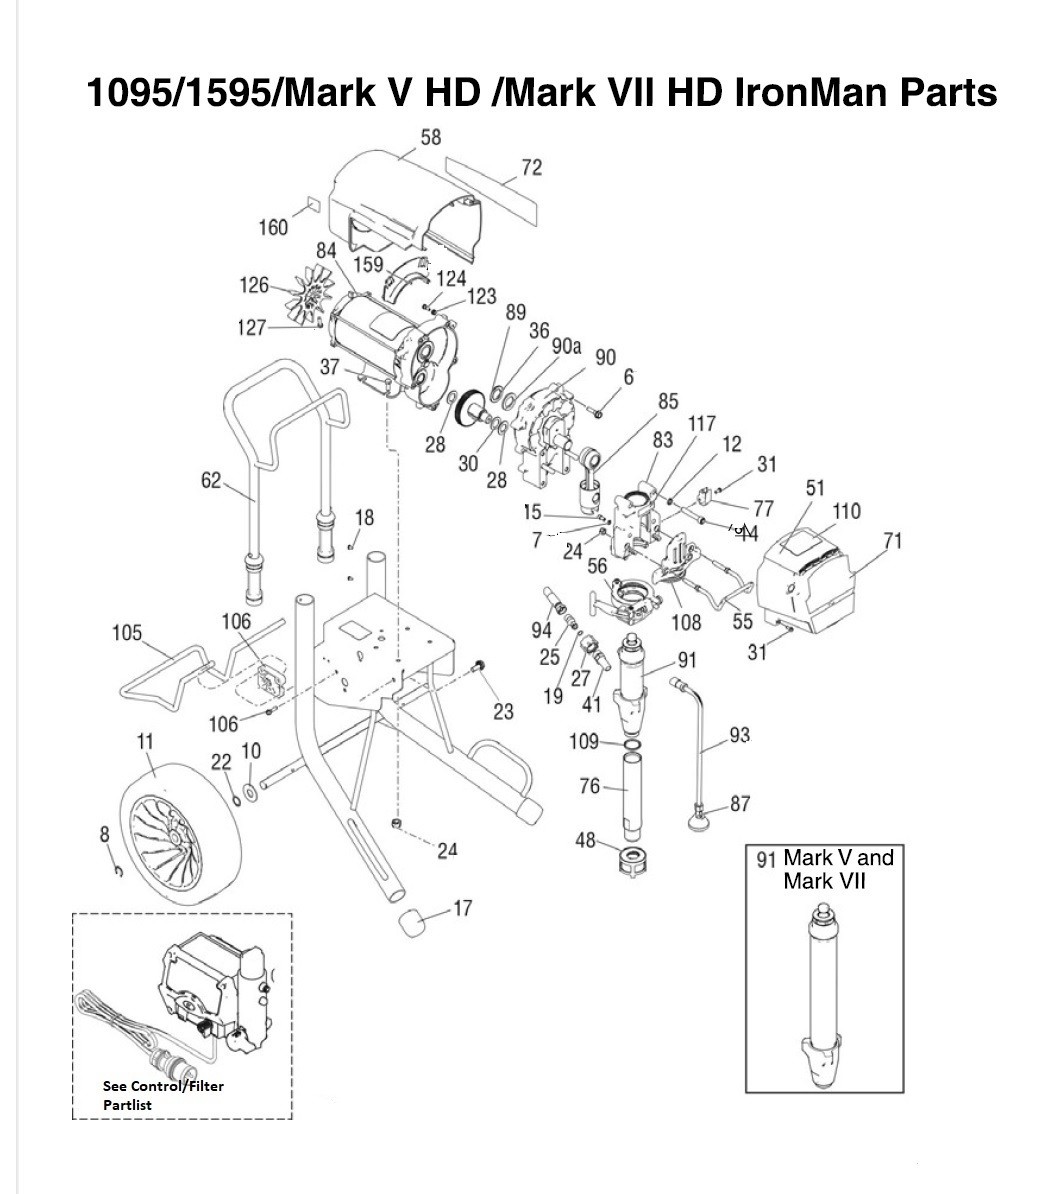 Graco 1095 IronMan Series Parts